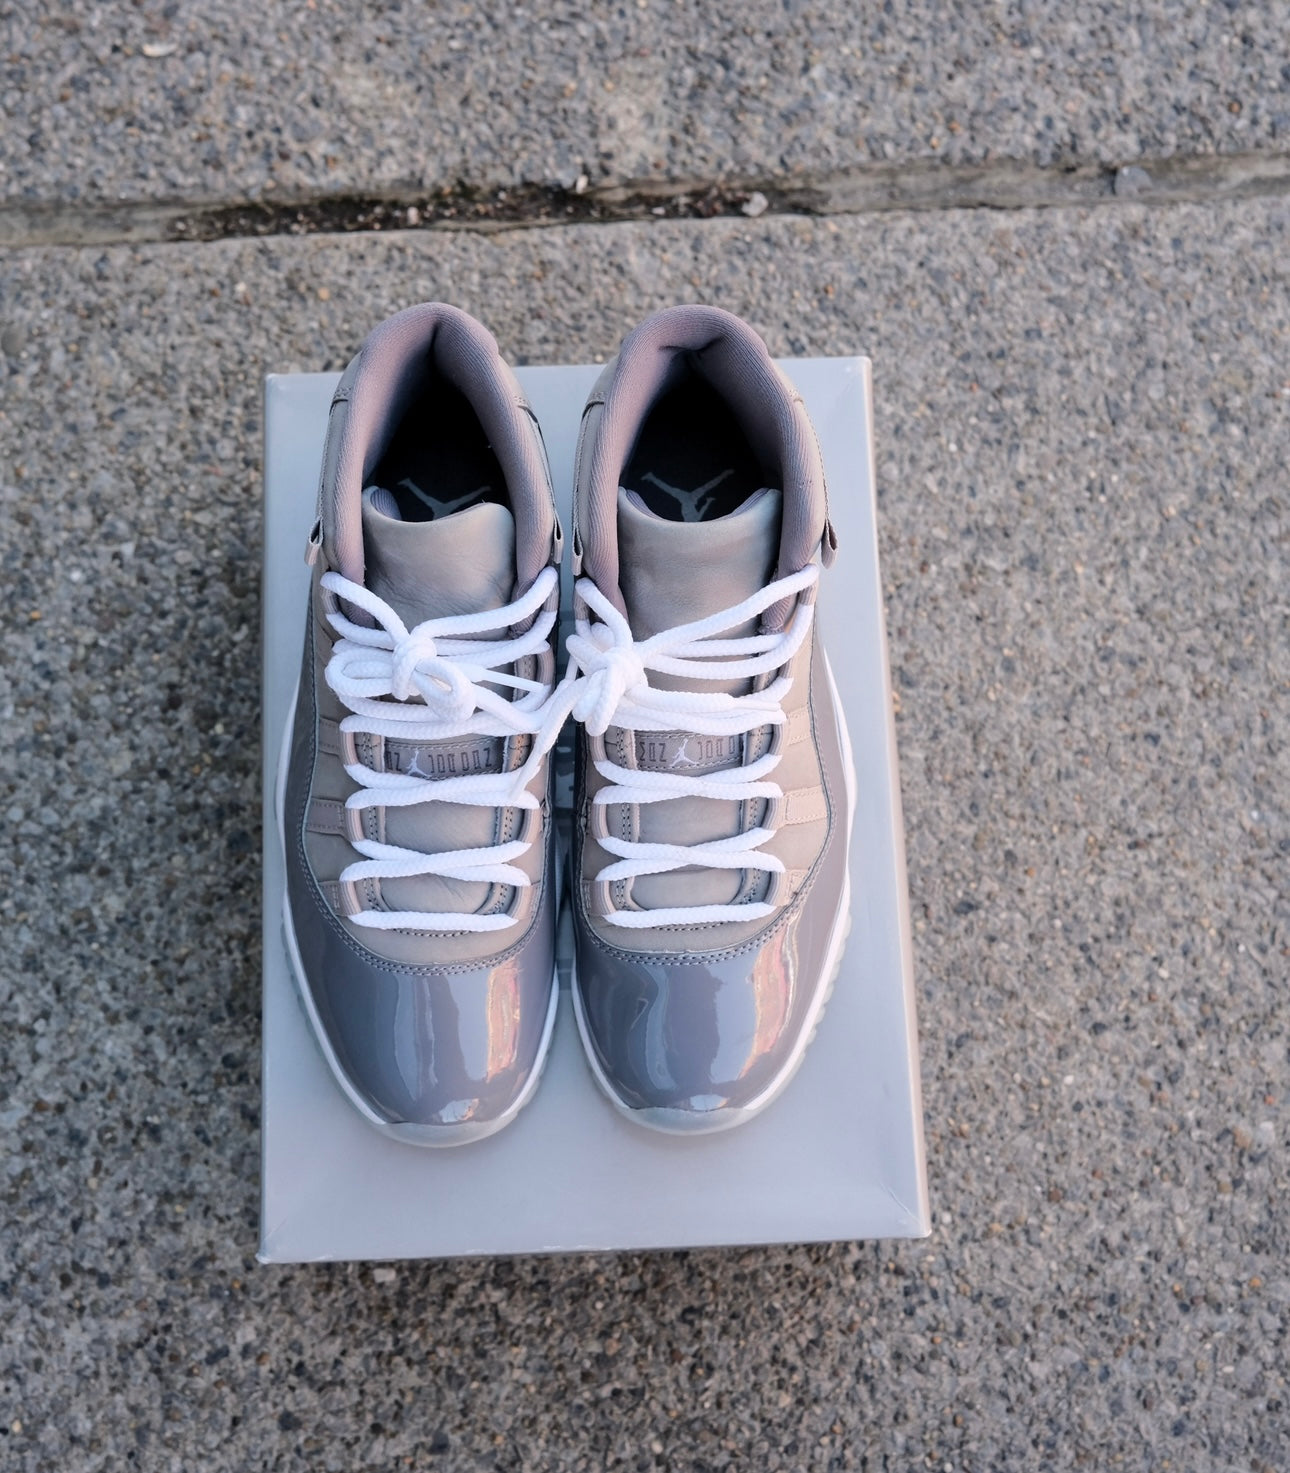 Air Jordan 11 “Cool Grey” Size 9